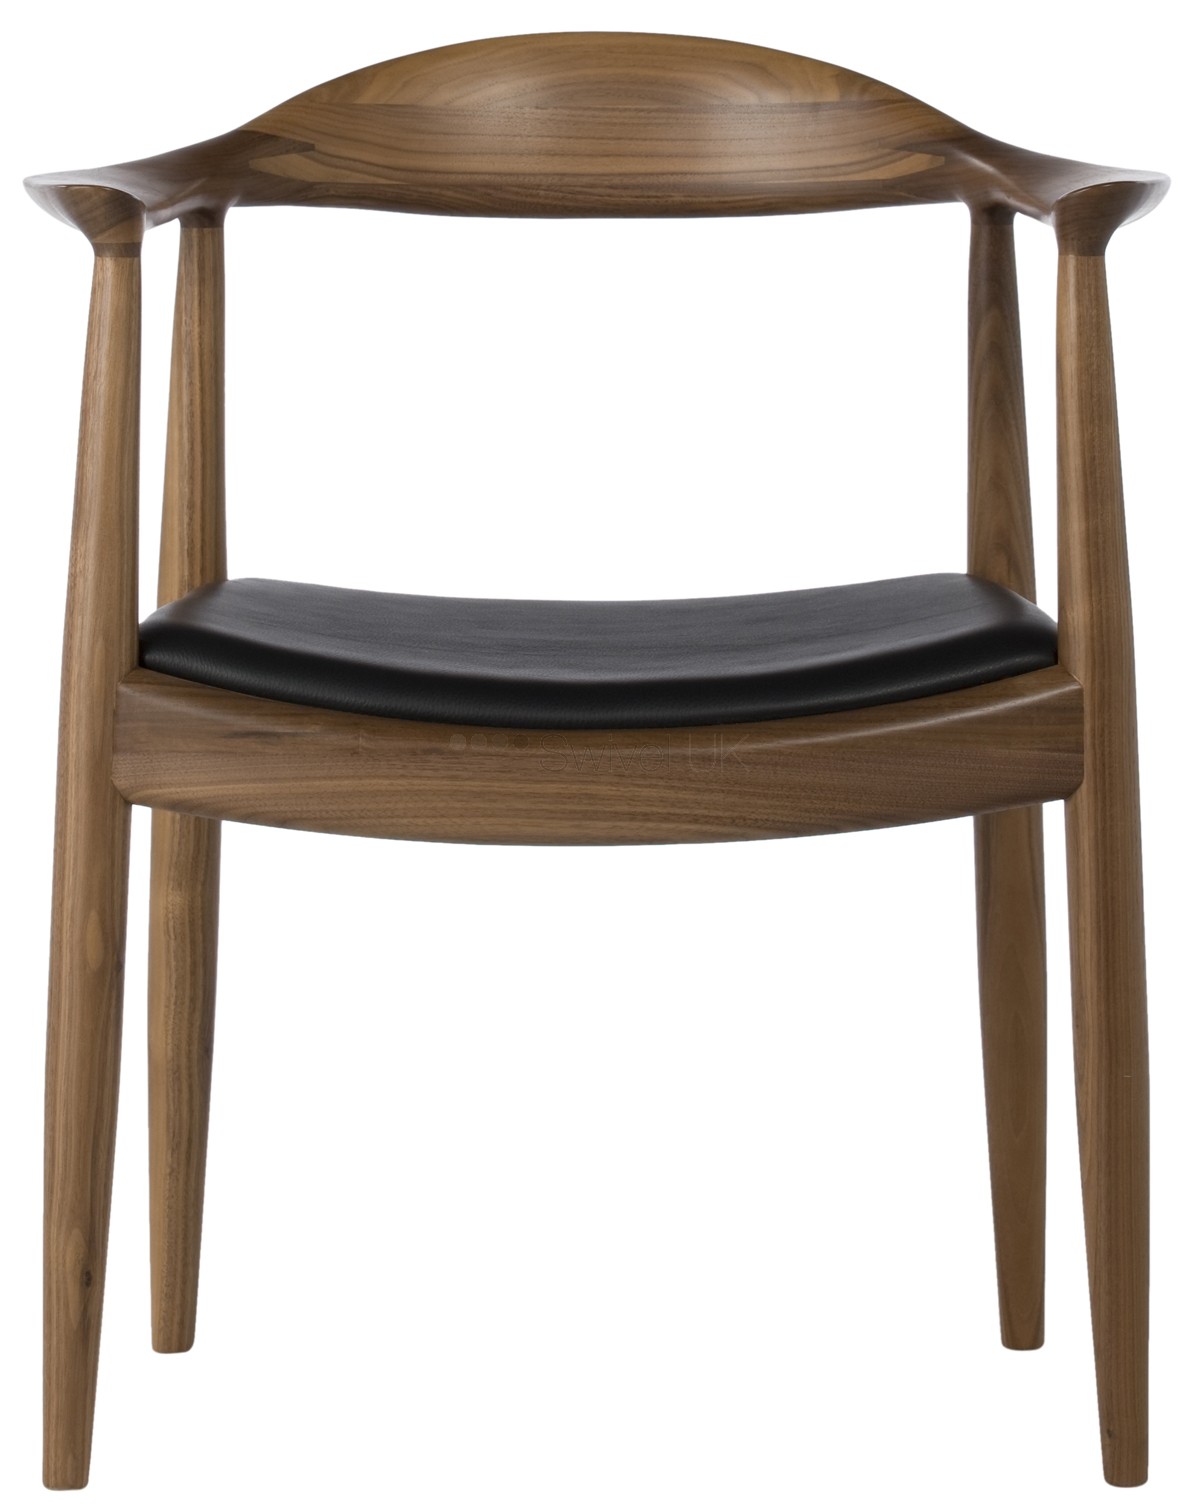 Designer Hans Wegner Kennedy Chair replica   